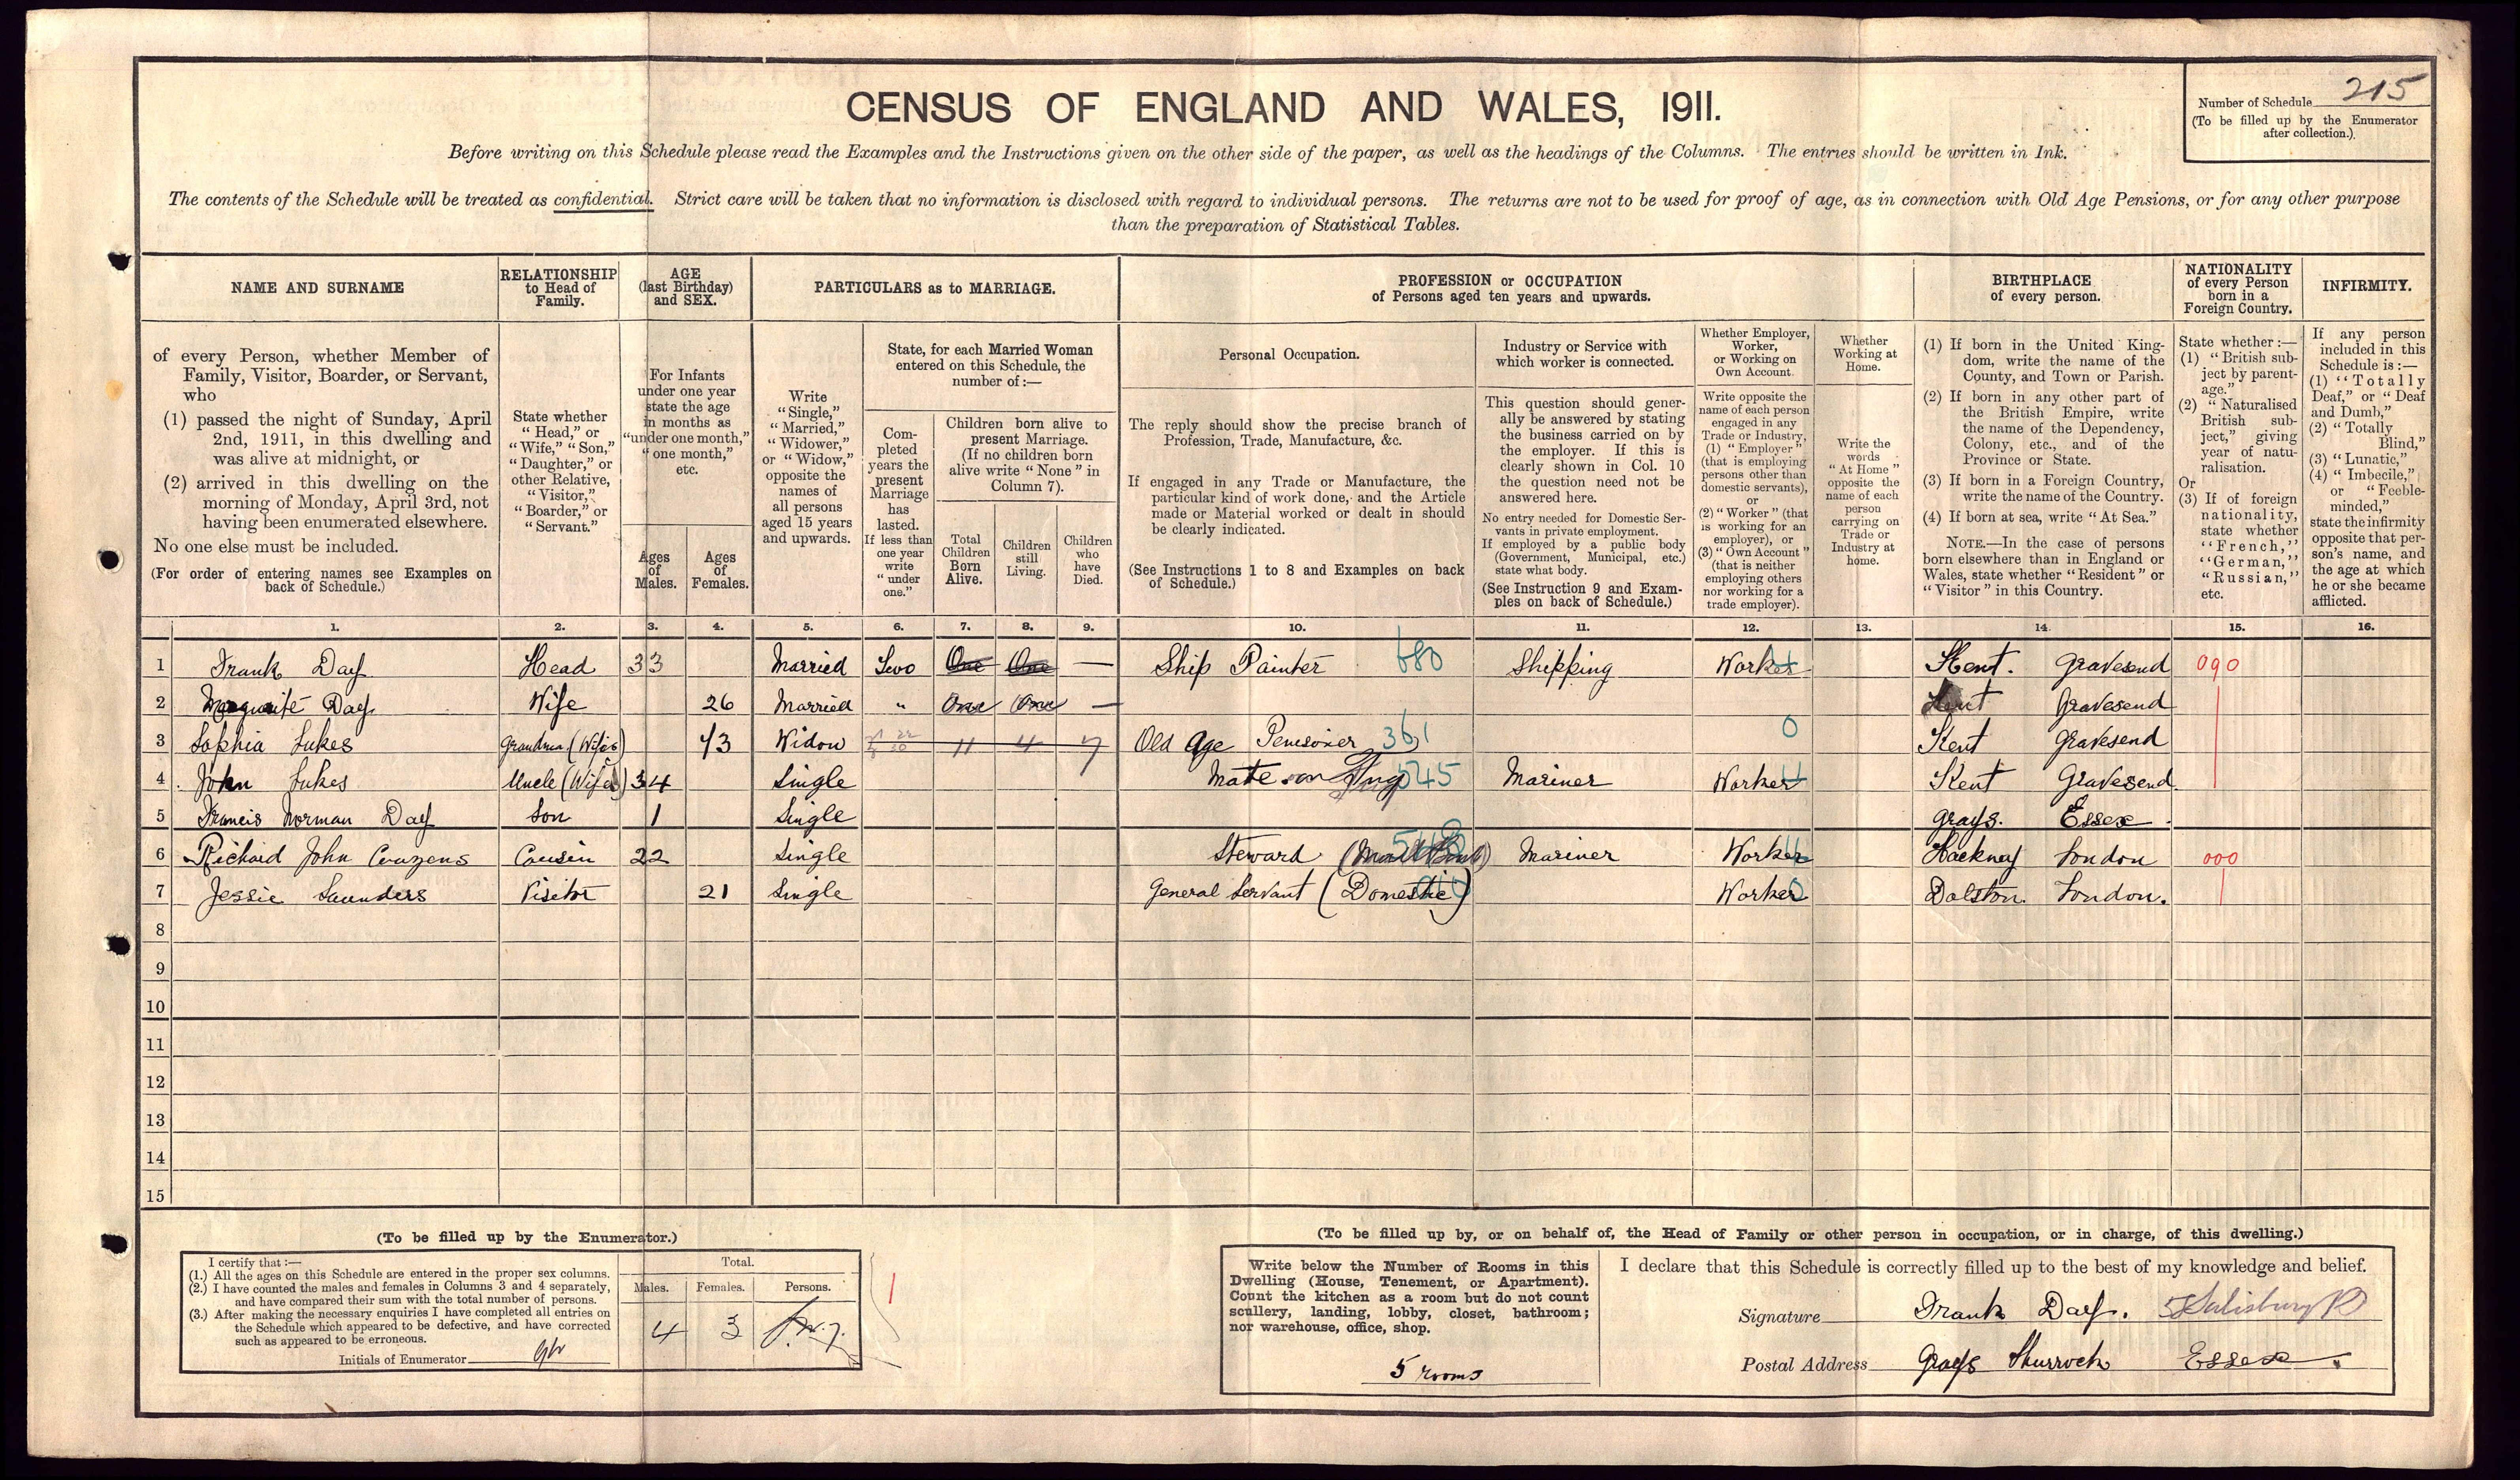 Frank Day Census Return 1911